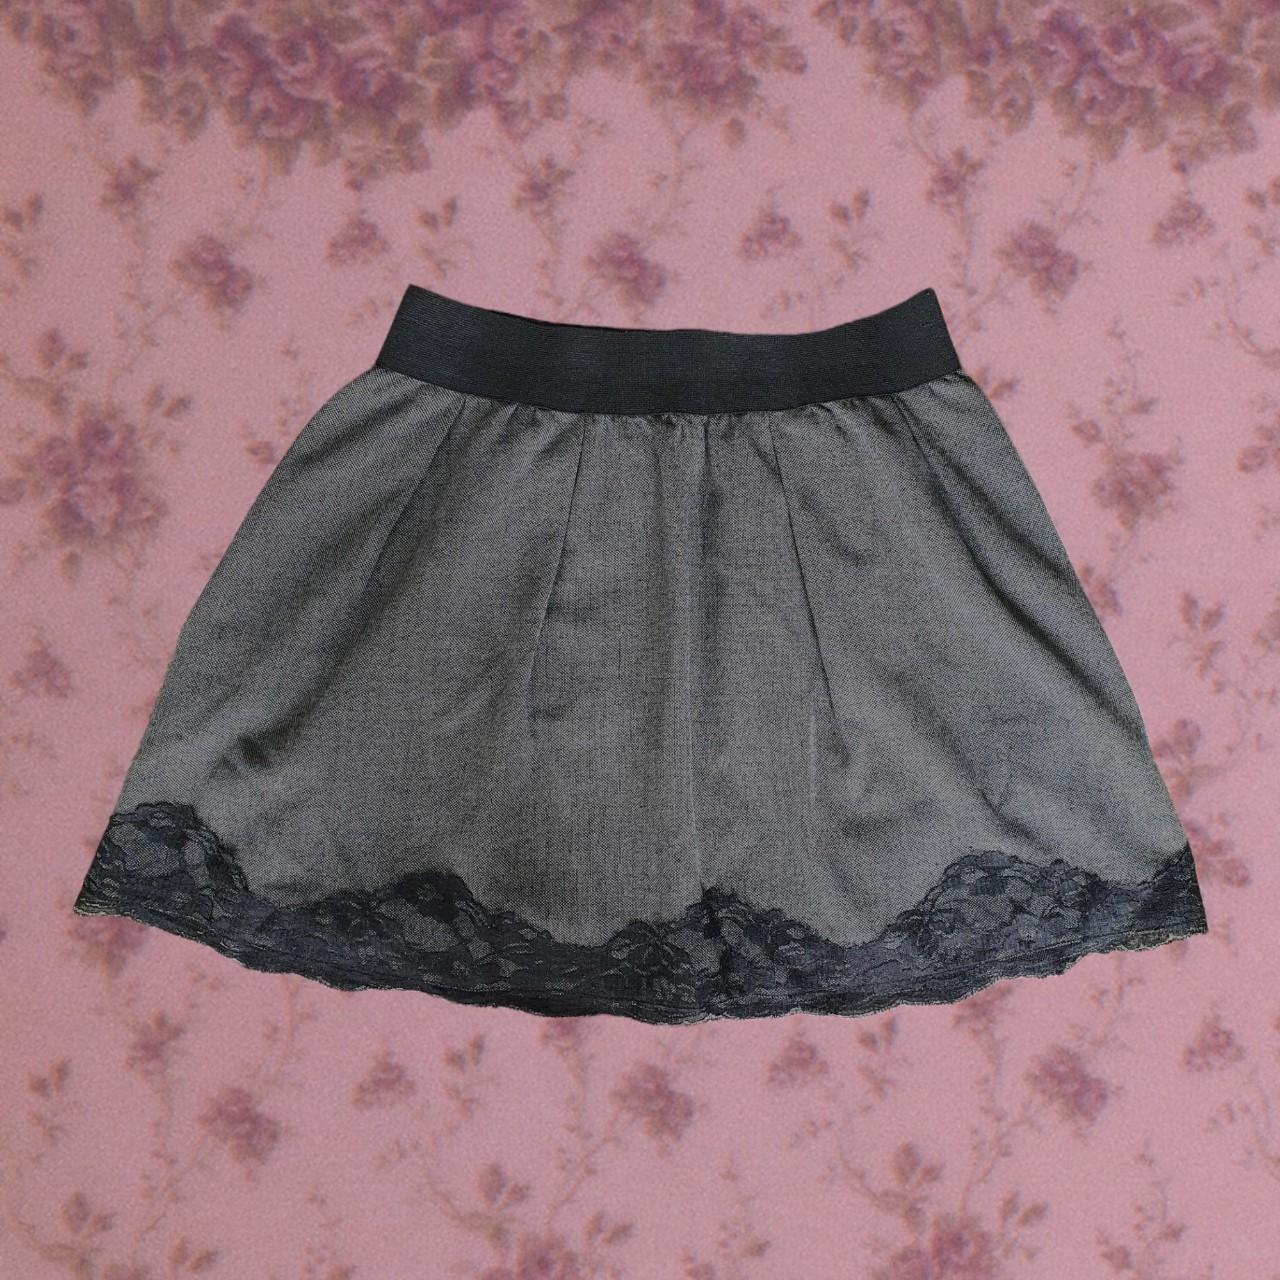 Vintage-Style Mini Skirt High-waist short skirt,... - Depop